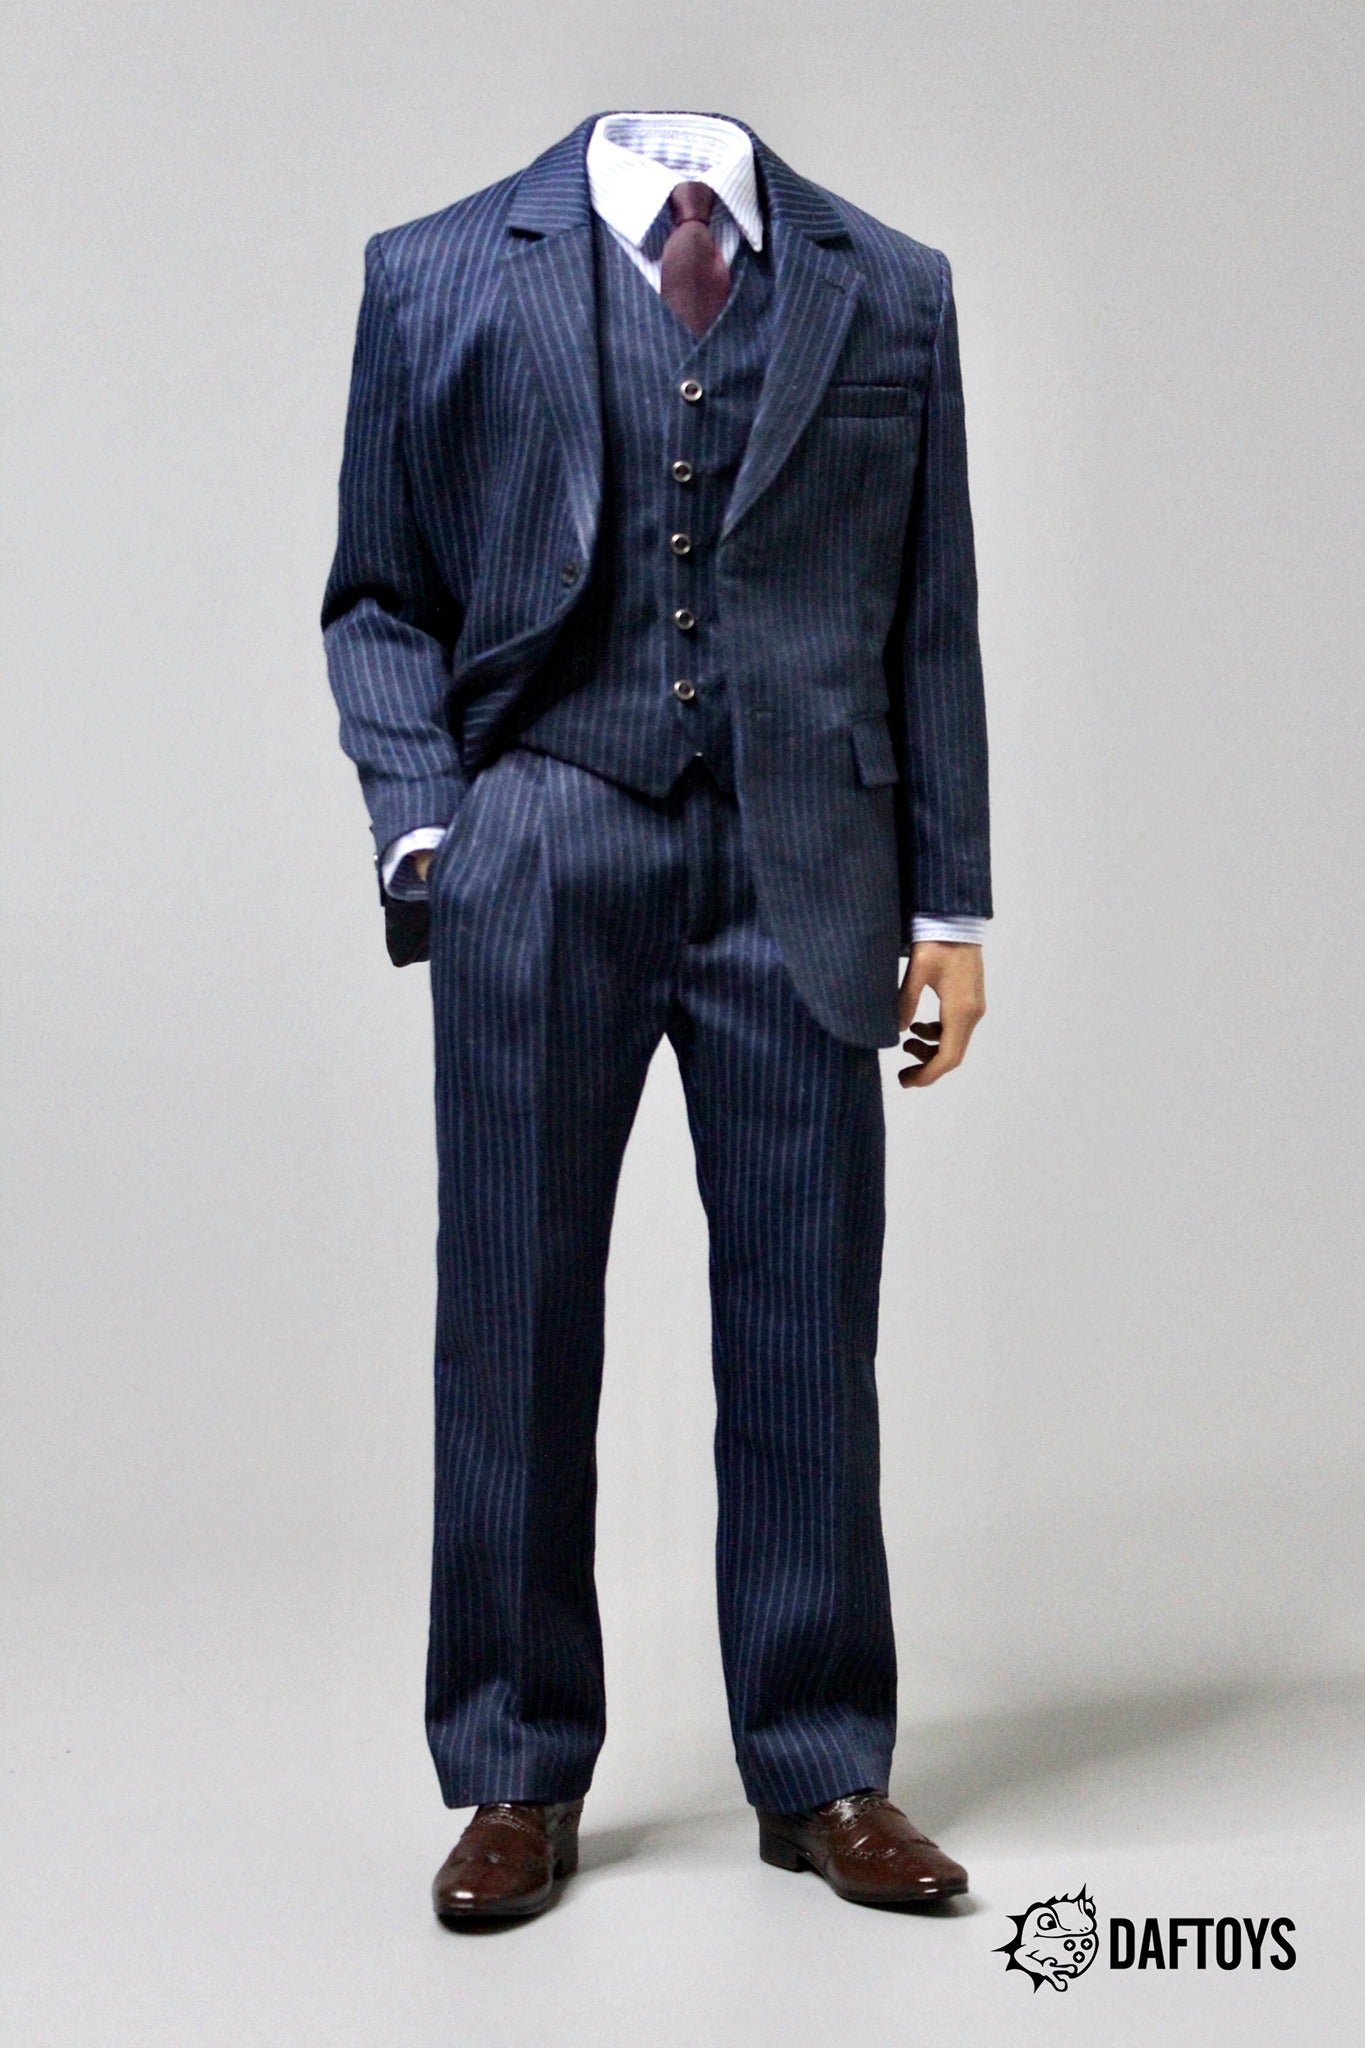 Pedido Set Business suit marca Daftoys EX01 escala 1/6